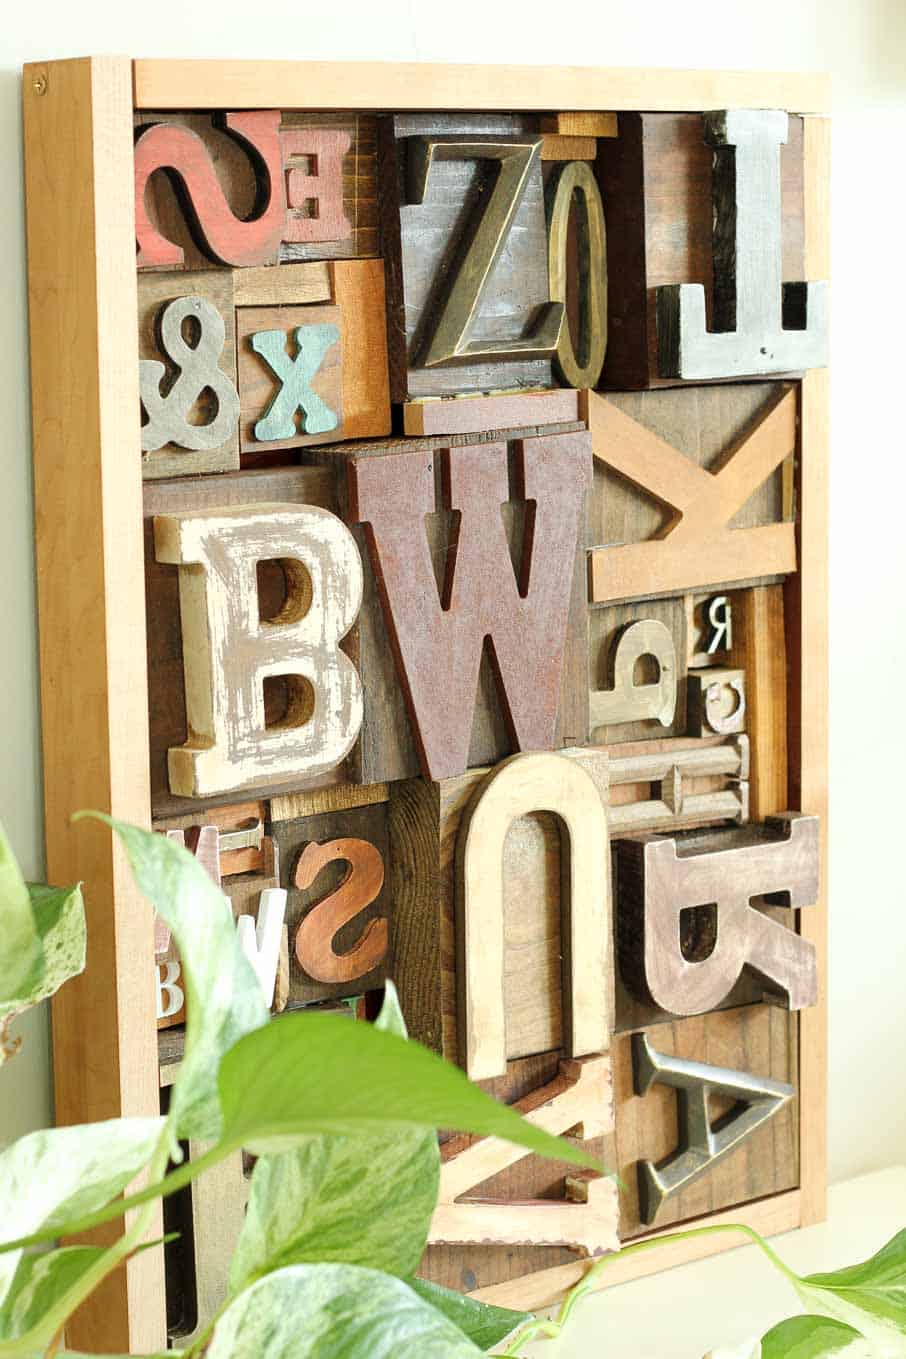 Custom Wooden Letter Blocks for Children : 4 Steps (with Pictures